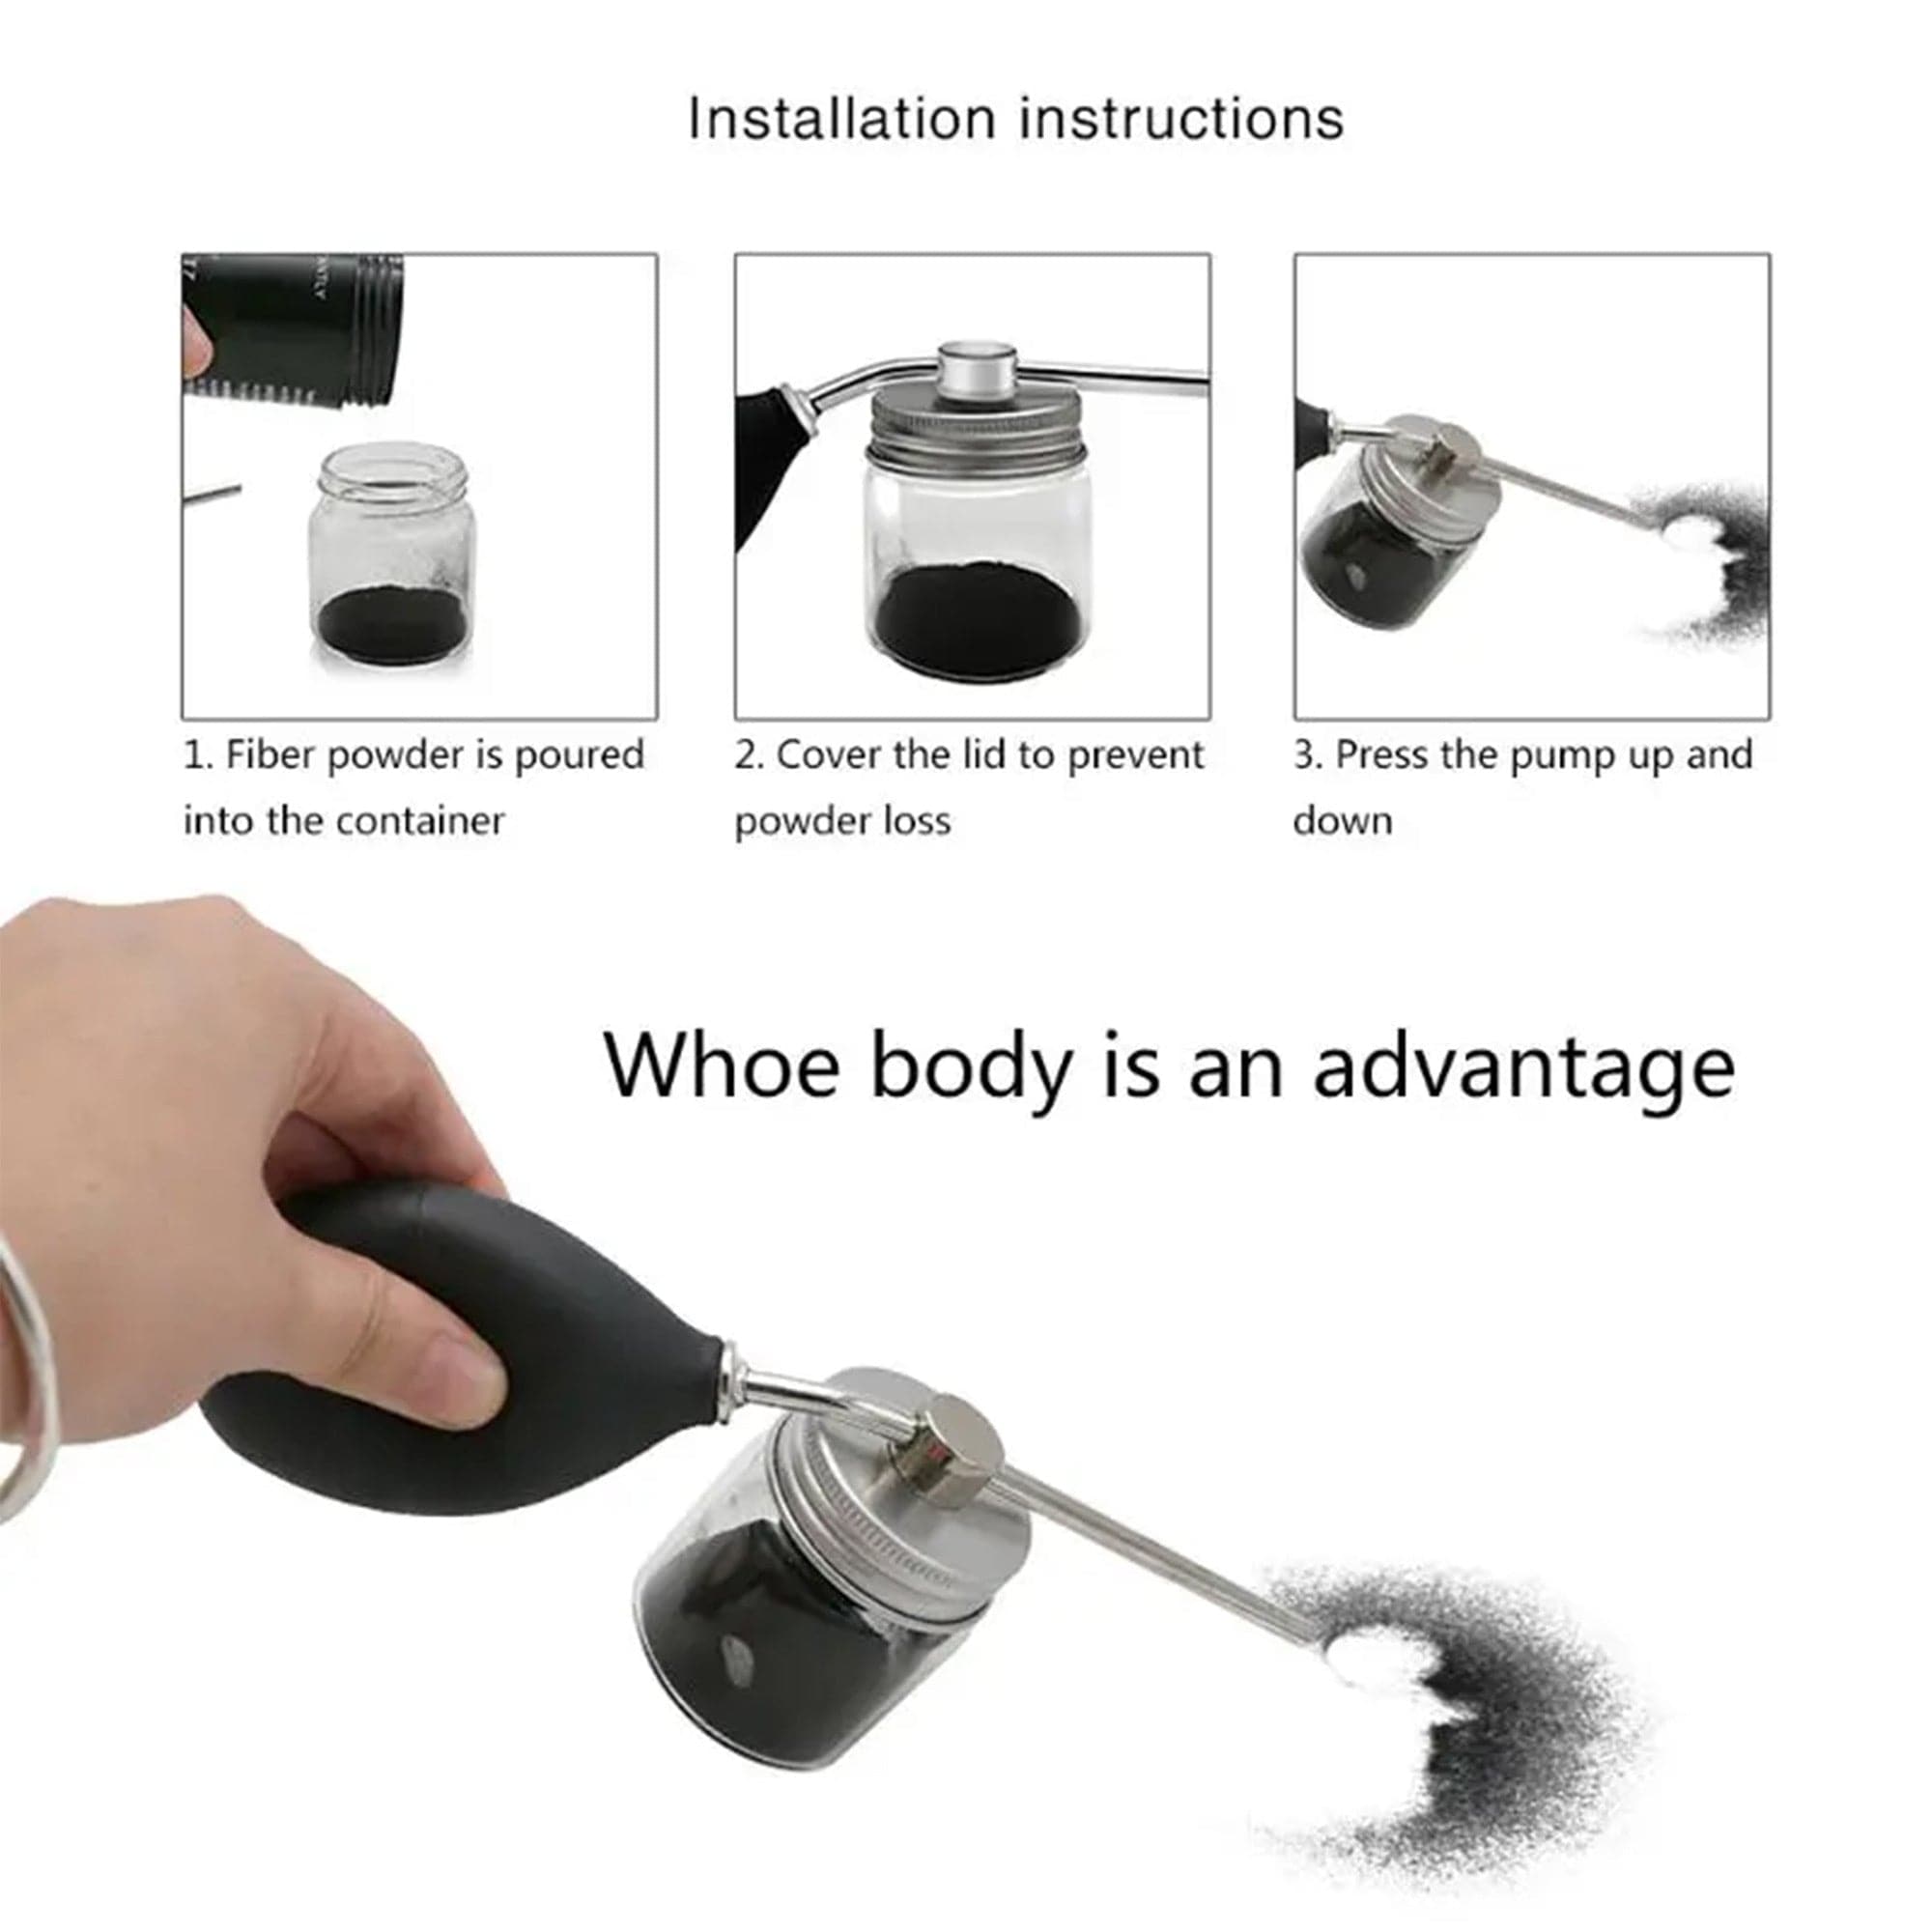 Eson - Hair Fiber Applicator Pump Sprayer